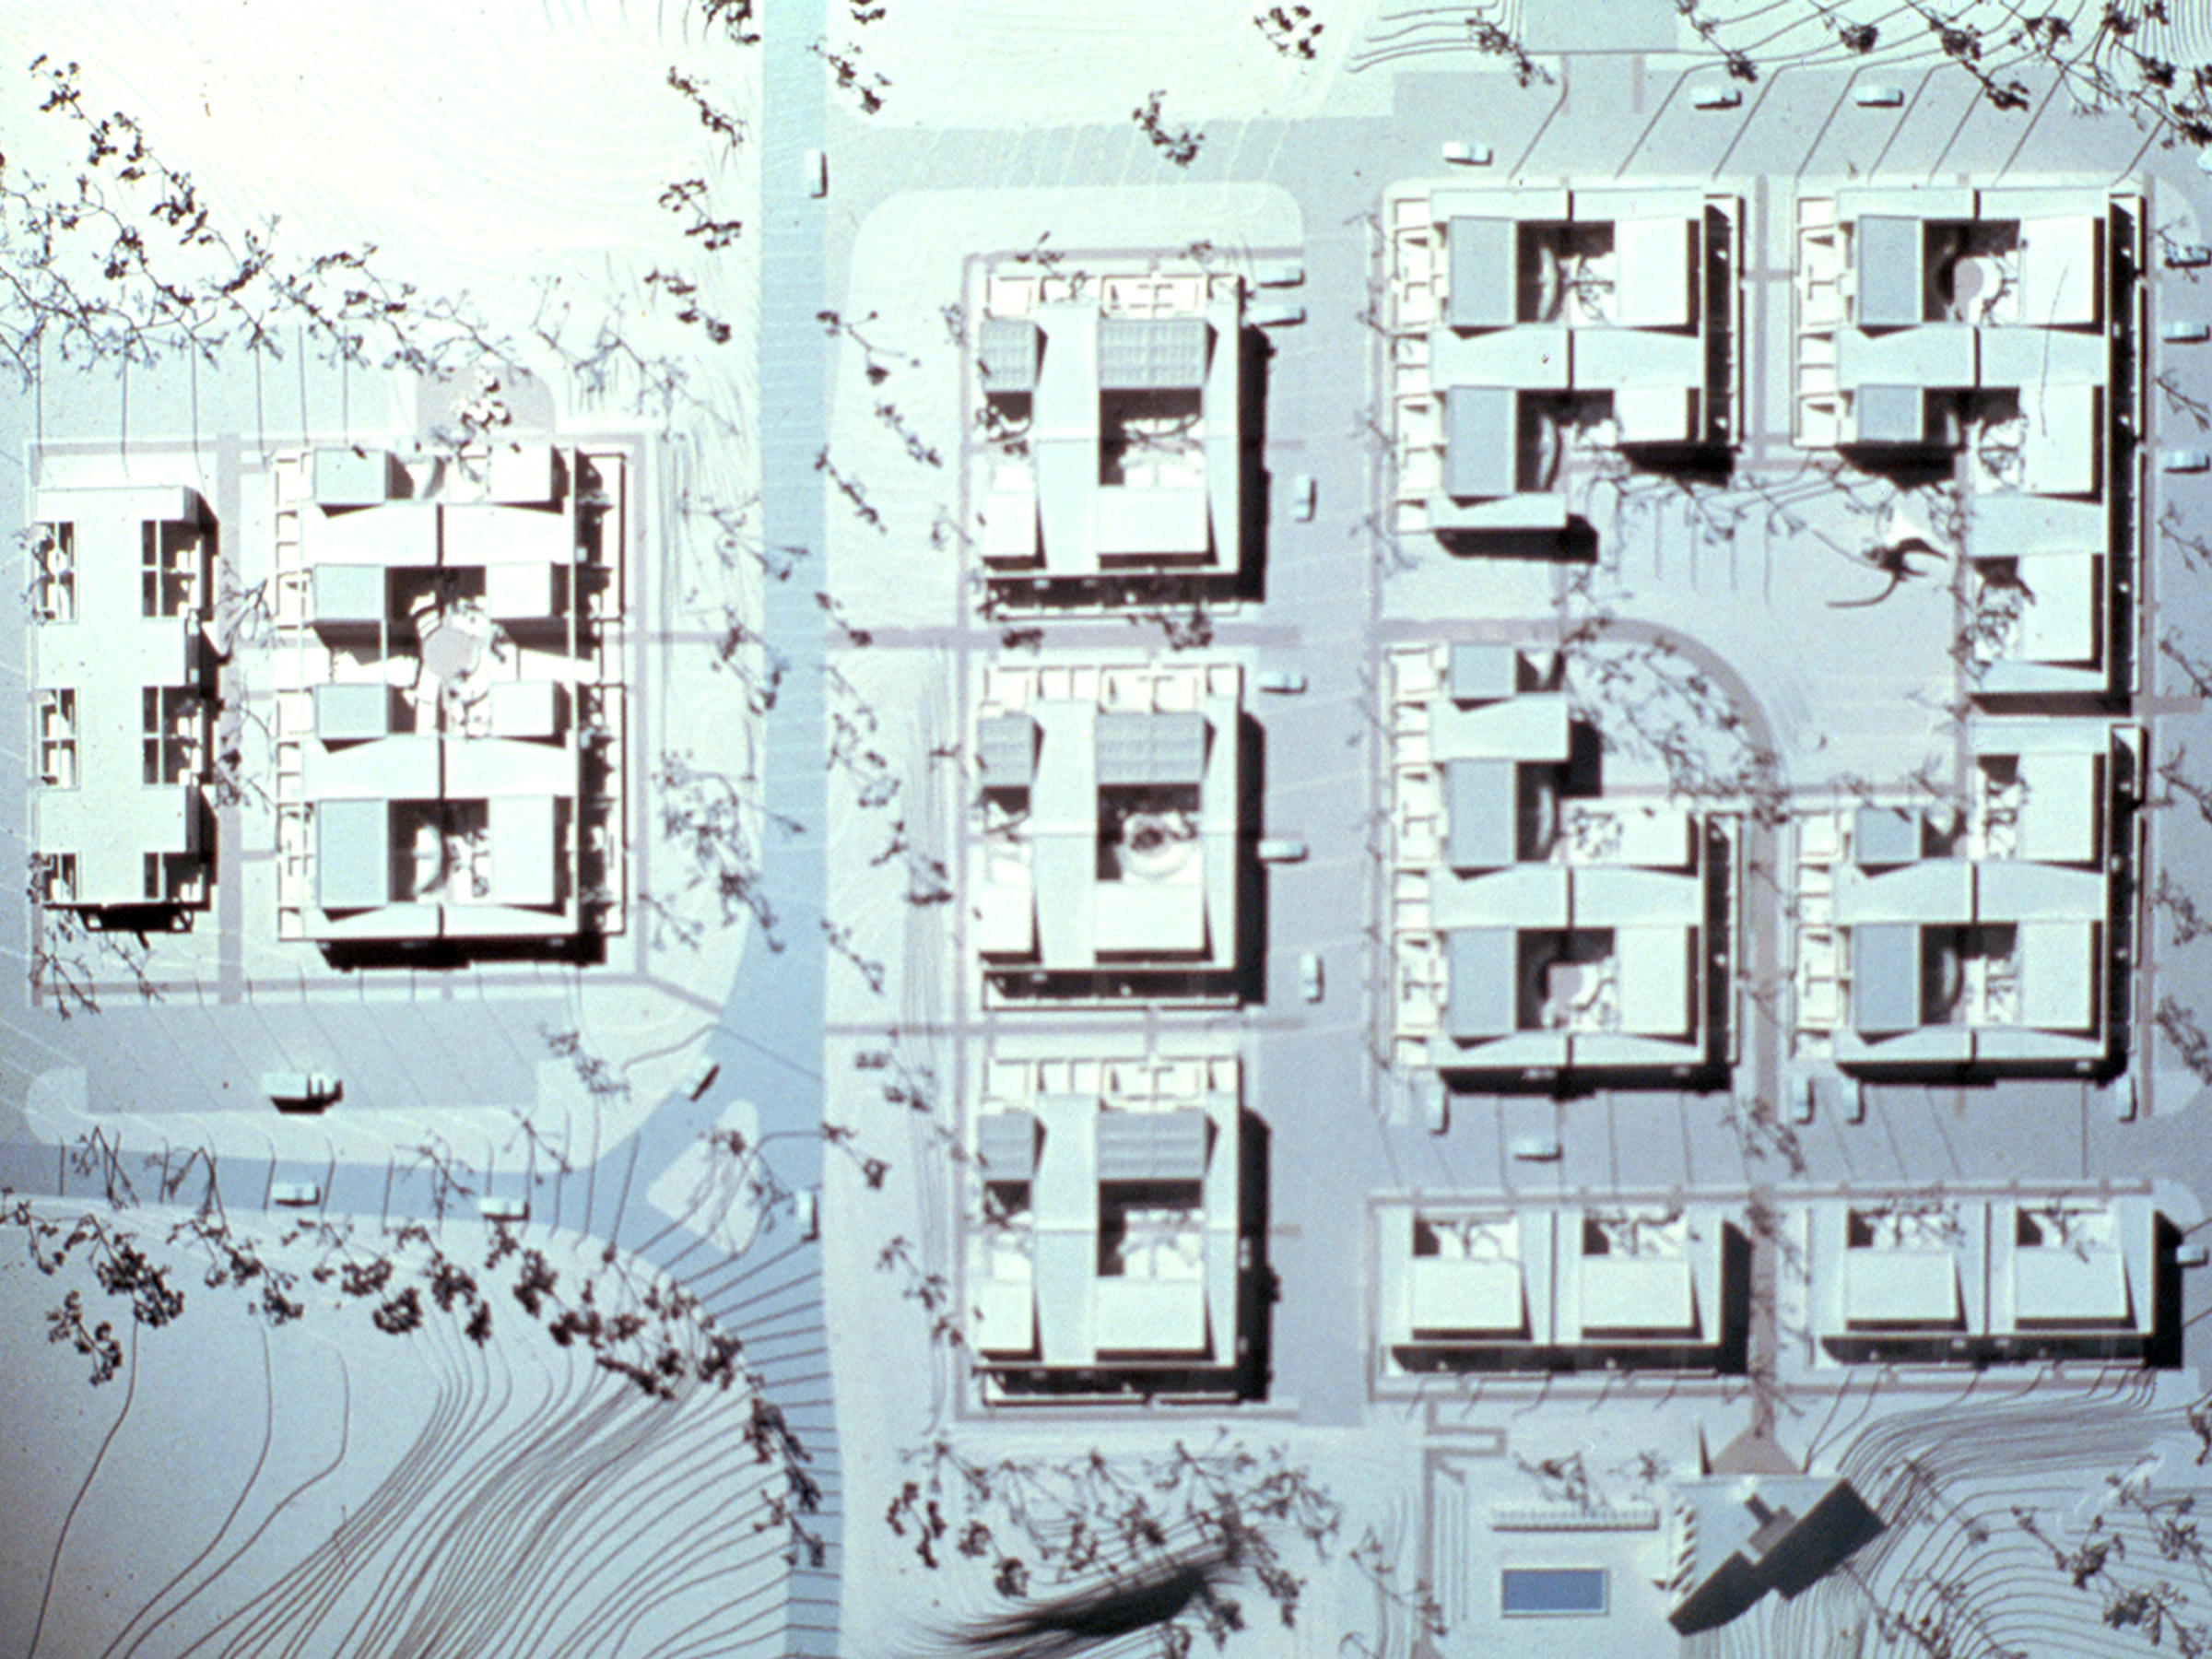 Bedford - Housing Complex Model Overhead Shot.jpg